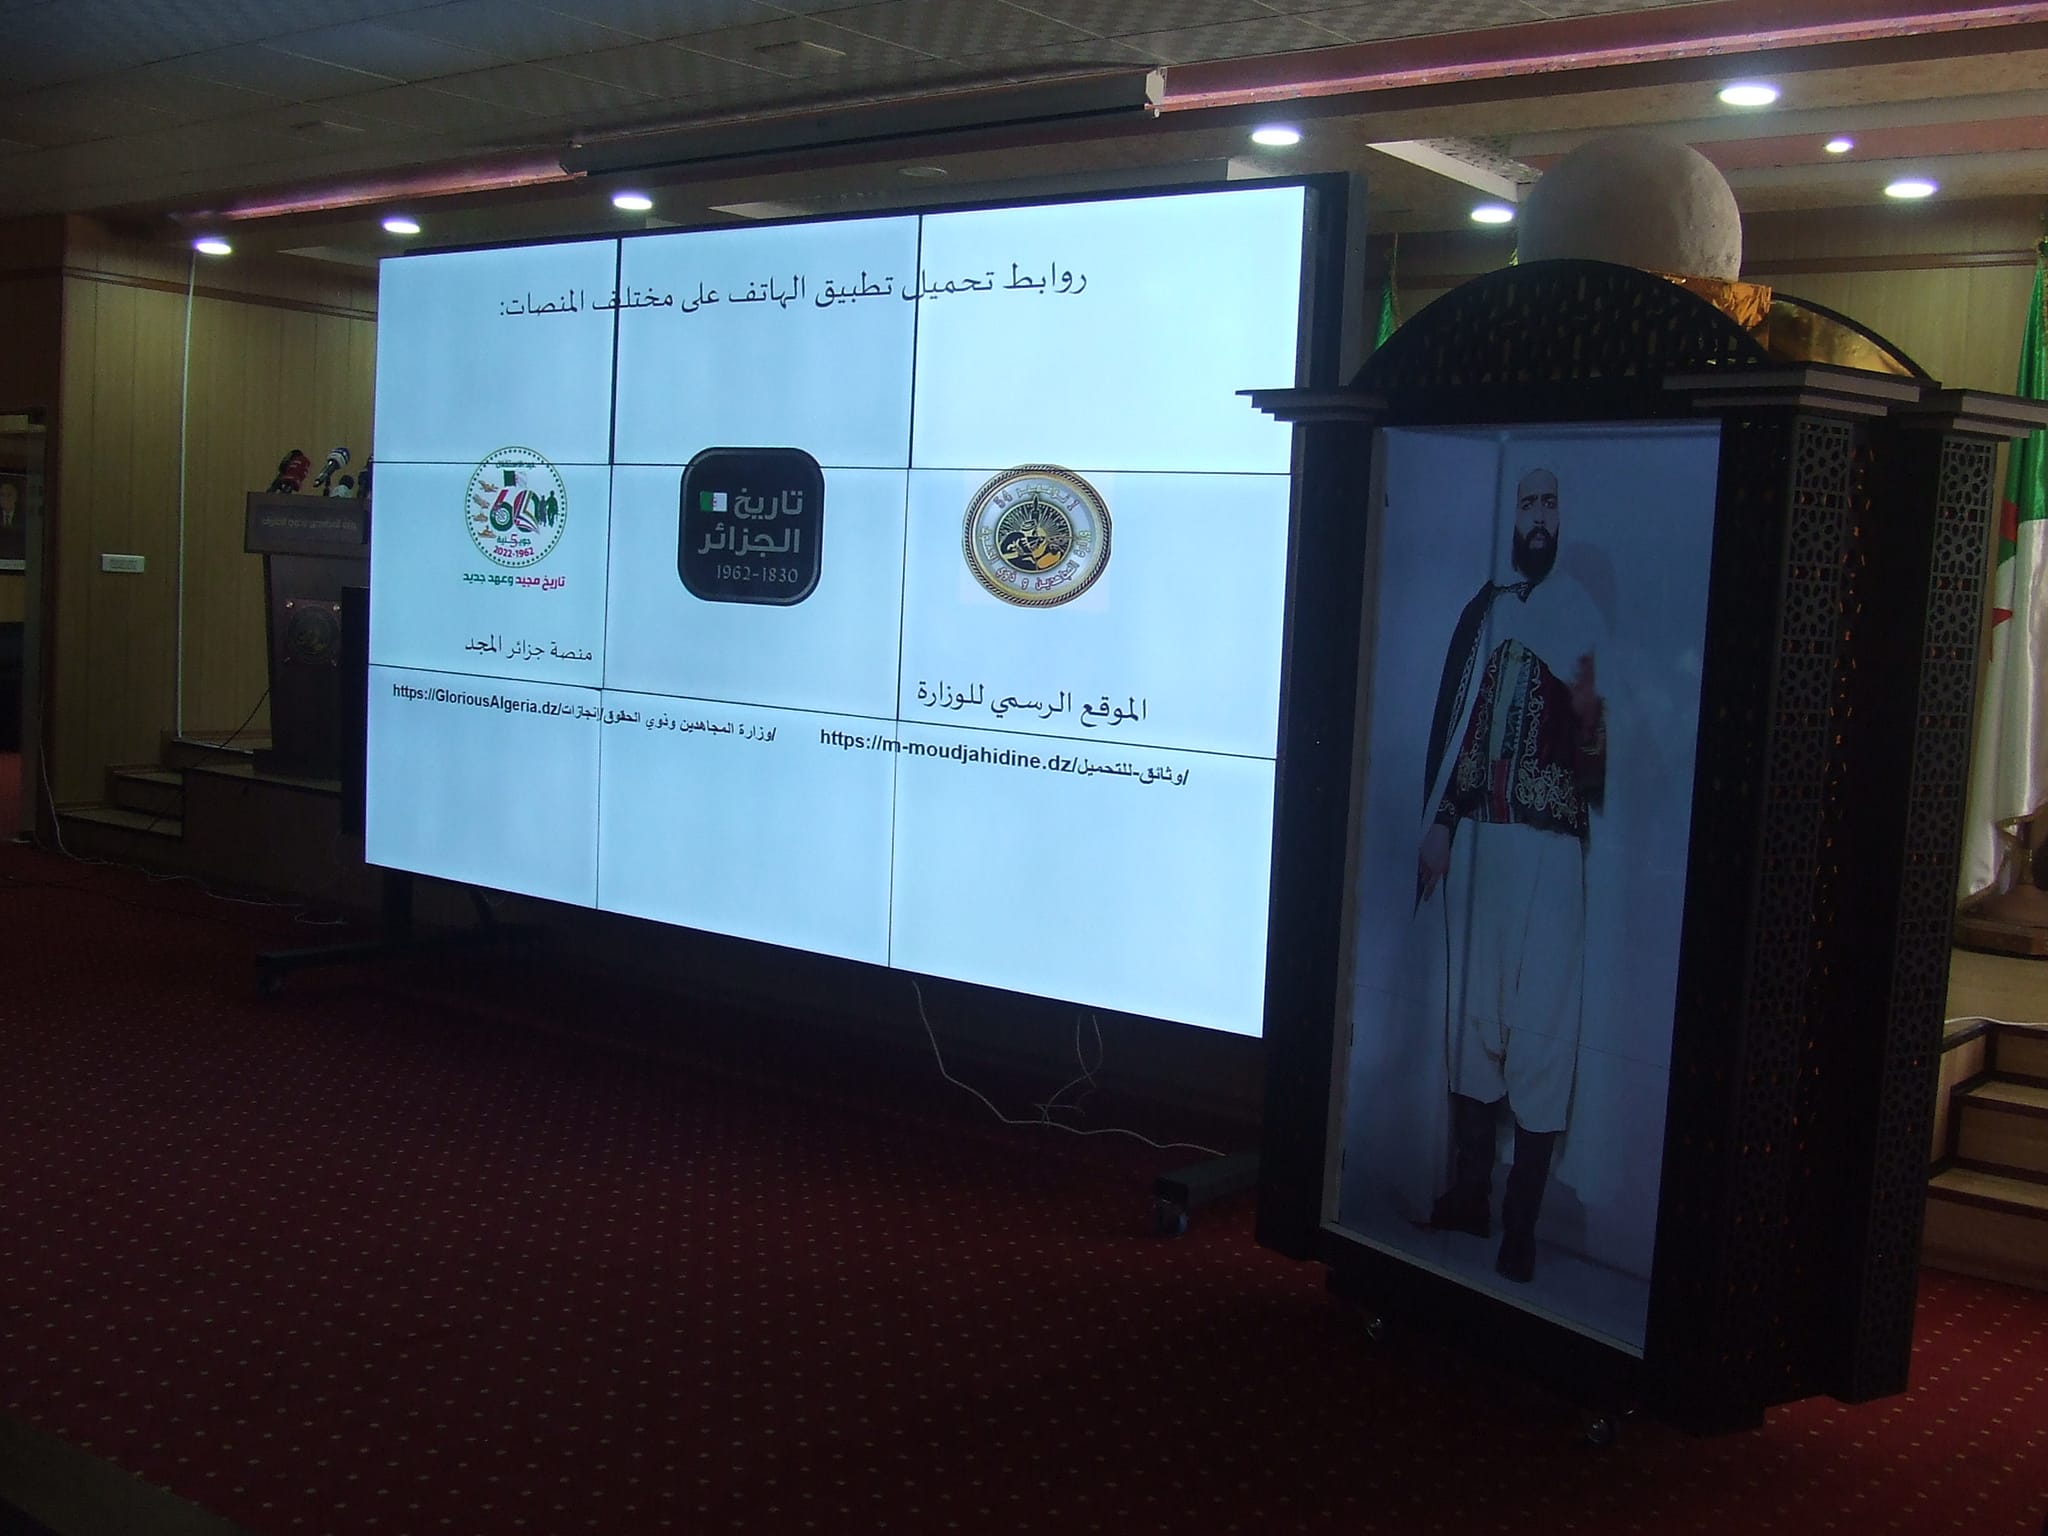 Rabika supervises the official launch of the mobile application “History of Algeria 1830-1962” - Al-Hiwar Al-Jazairia